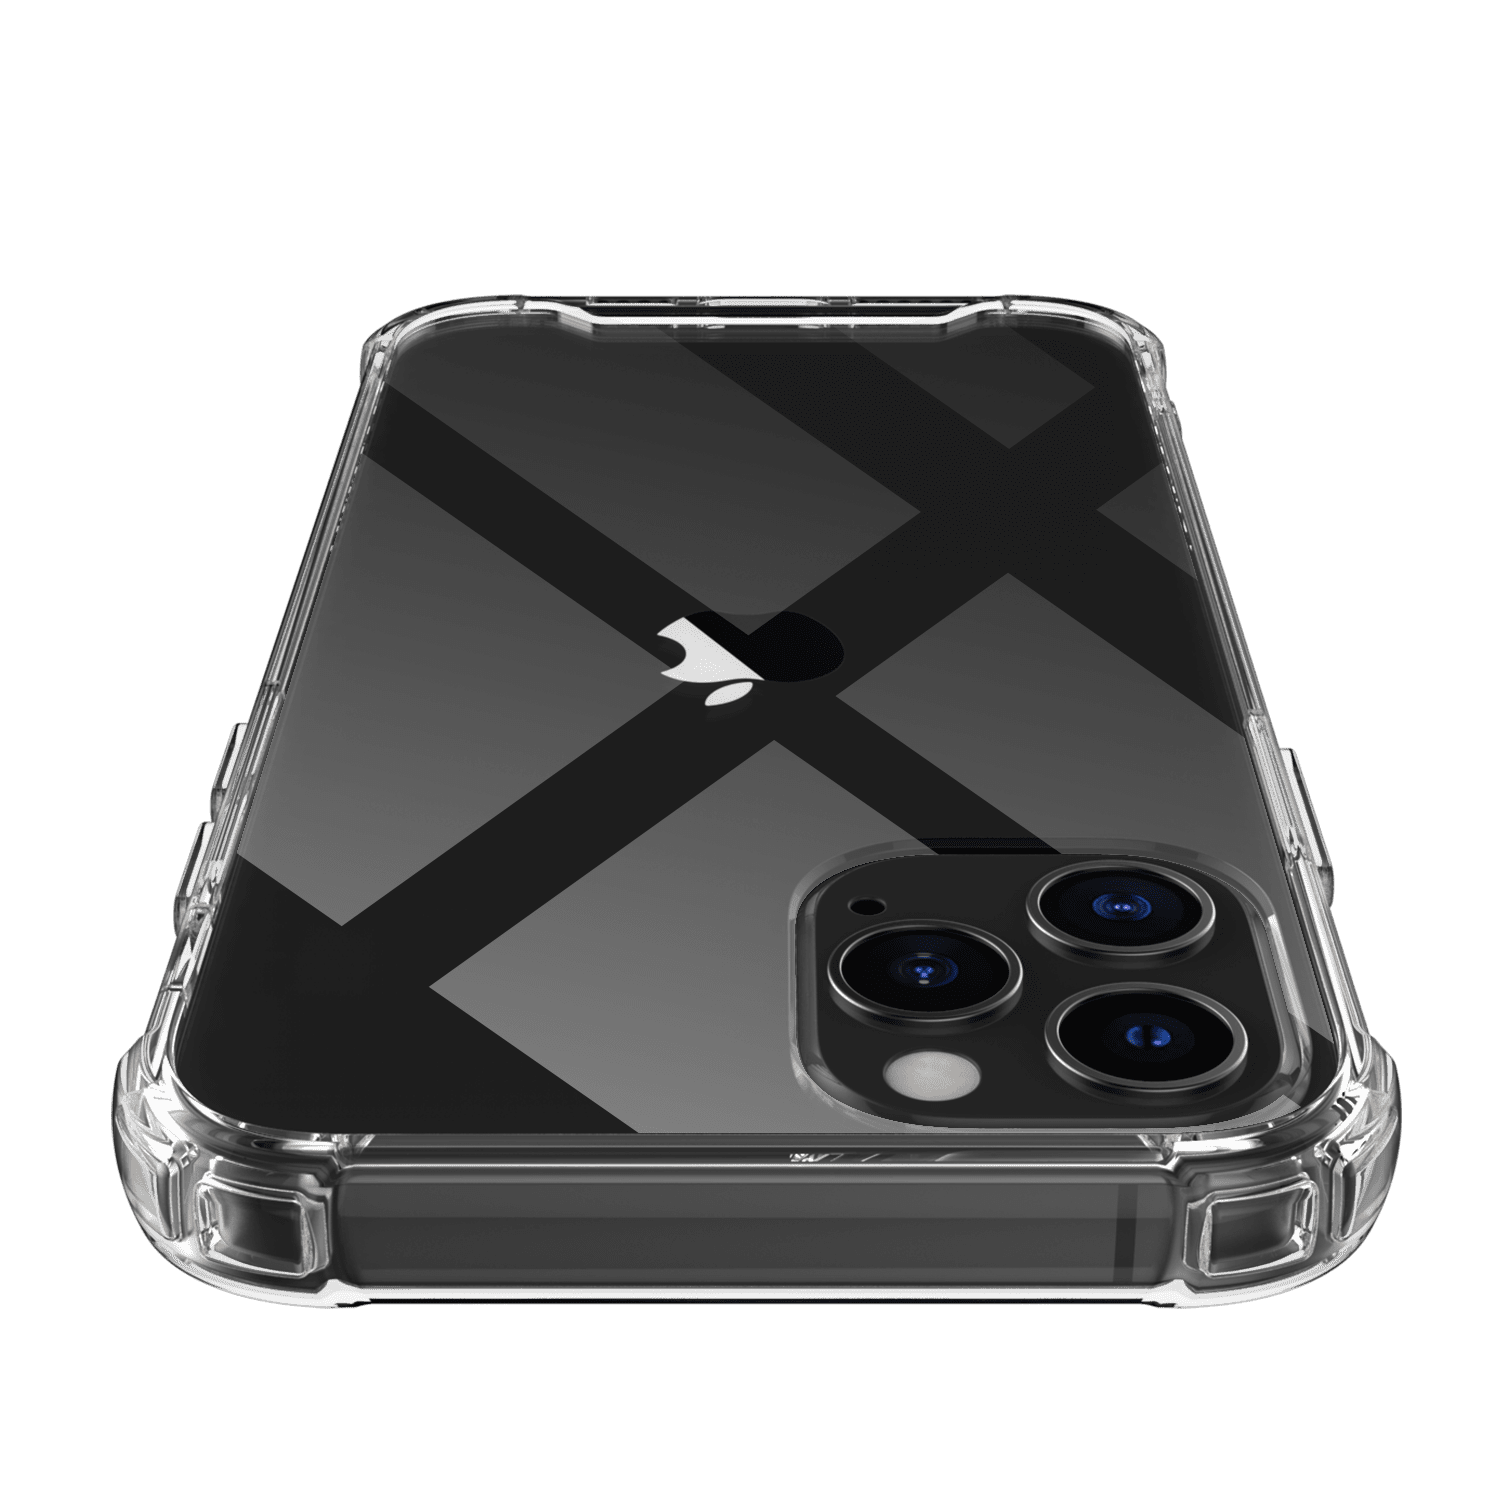 Shamos Iphone 12 Pro Max Case Crystal Clear Anti Scratch Shock